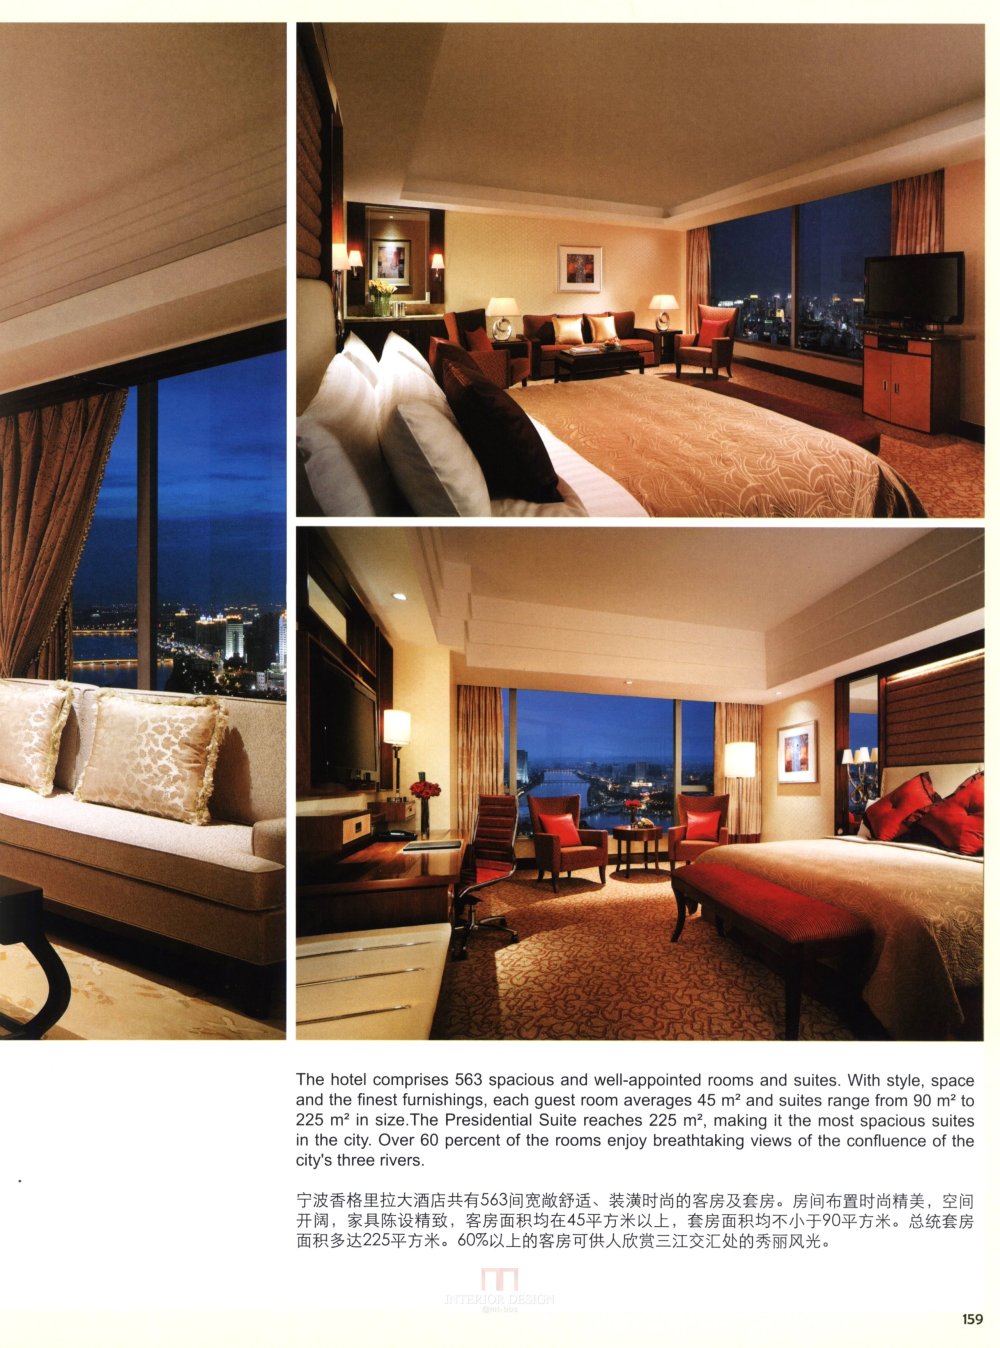 101全球酒店客房 101HOTELS GUEST ROOMS_图站_AiJpgg_com_154.jpg